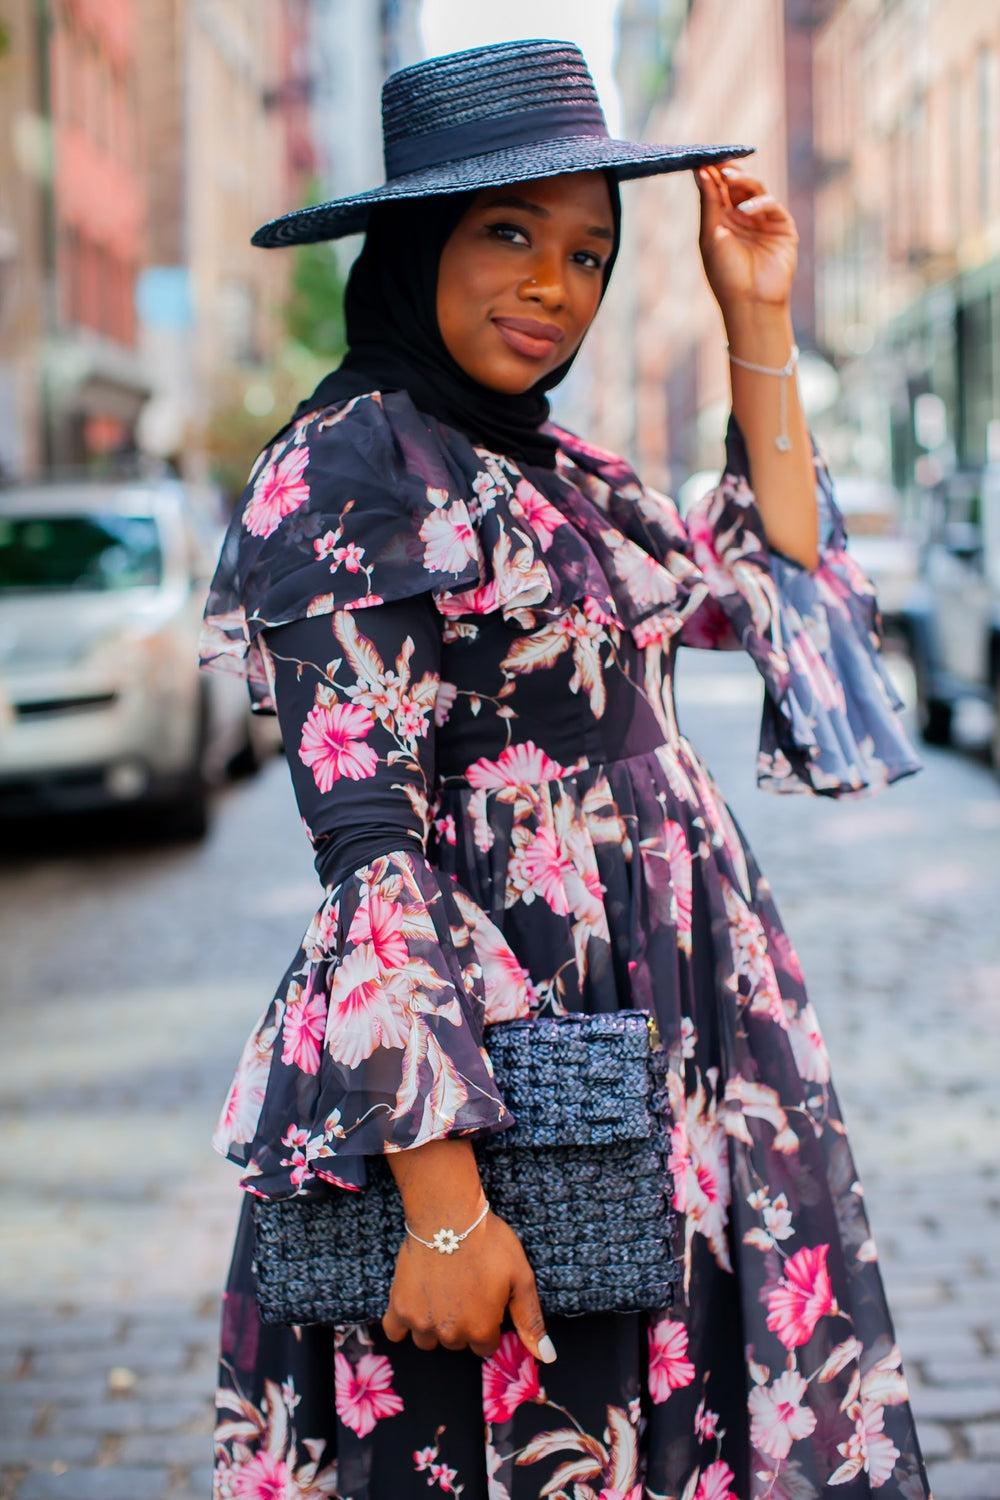 LuxHijabs Lux Bamboo Hijab Undercap Black | Hijab Underscarf